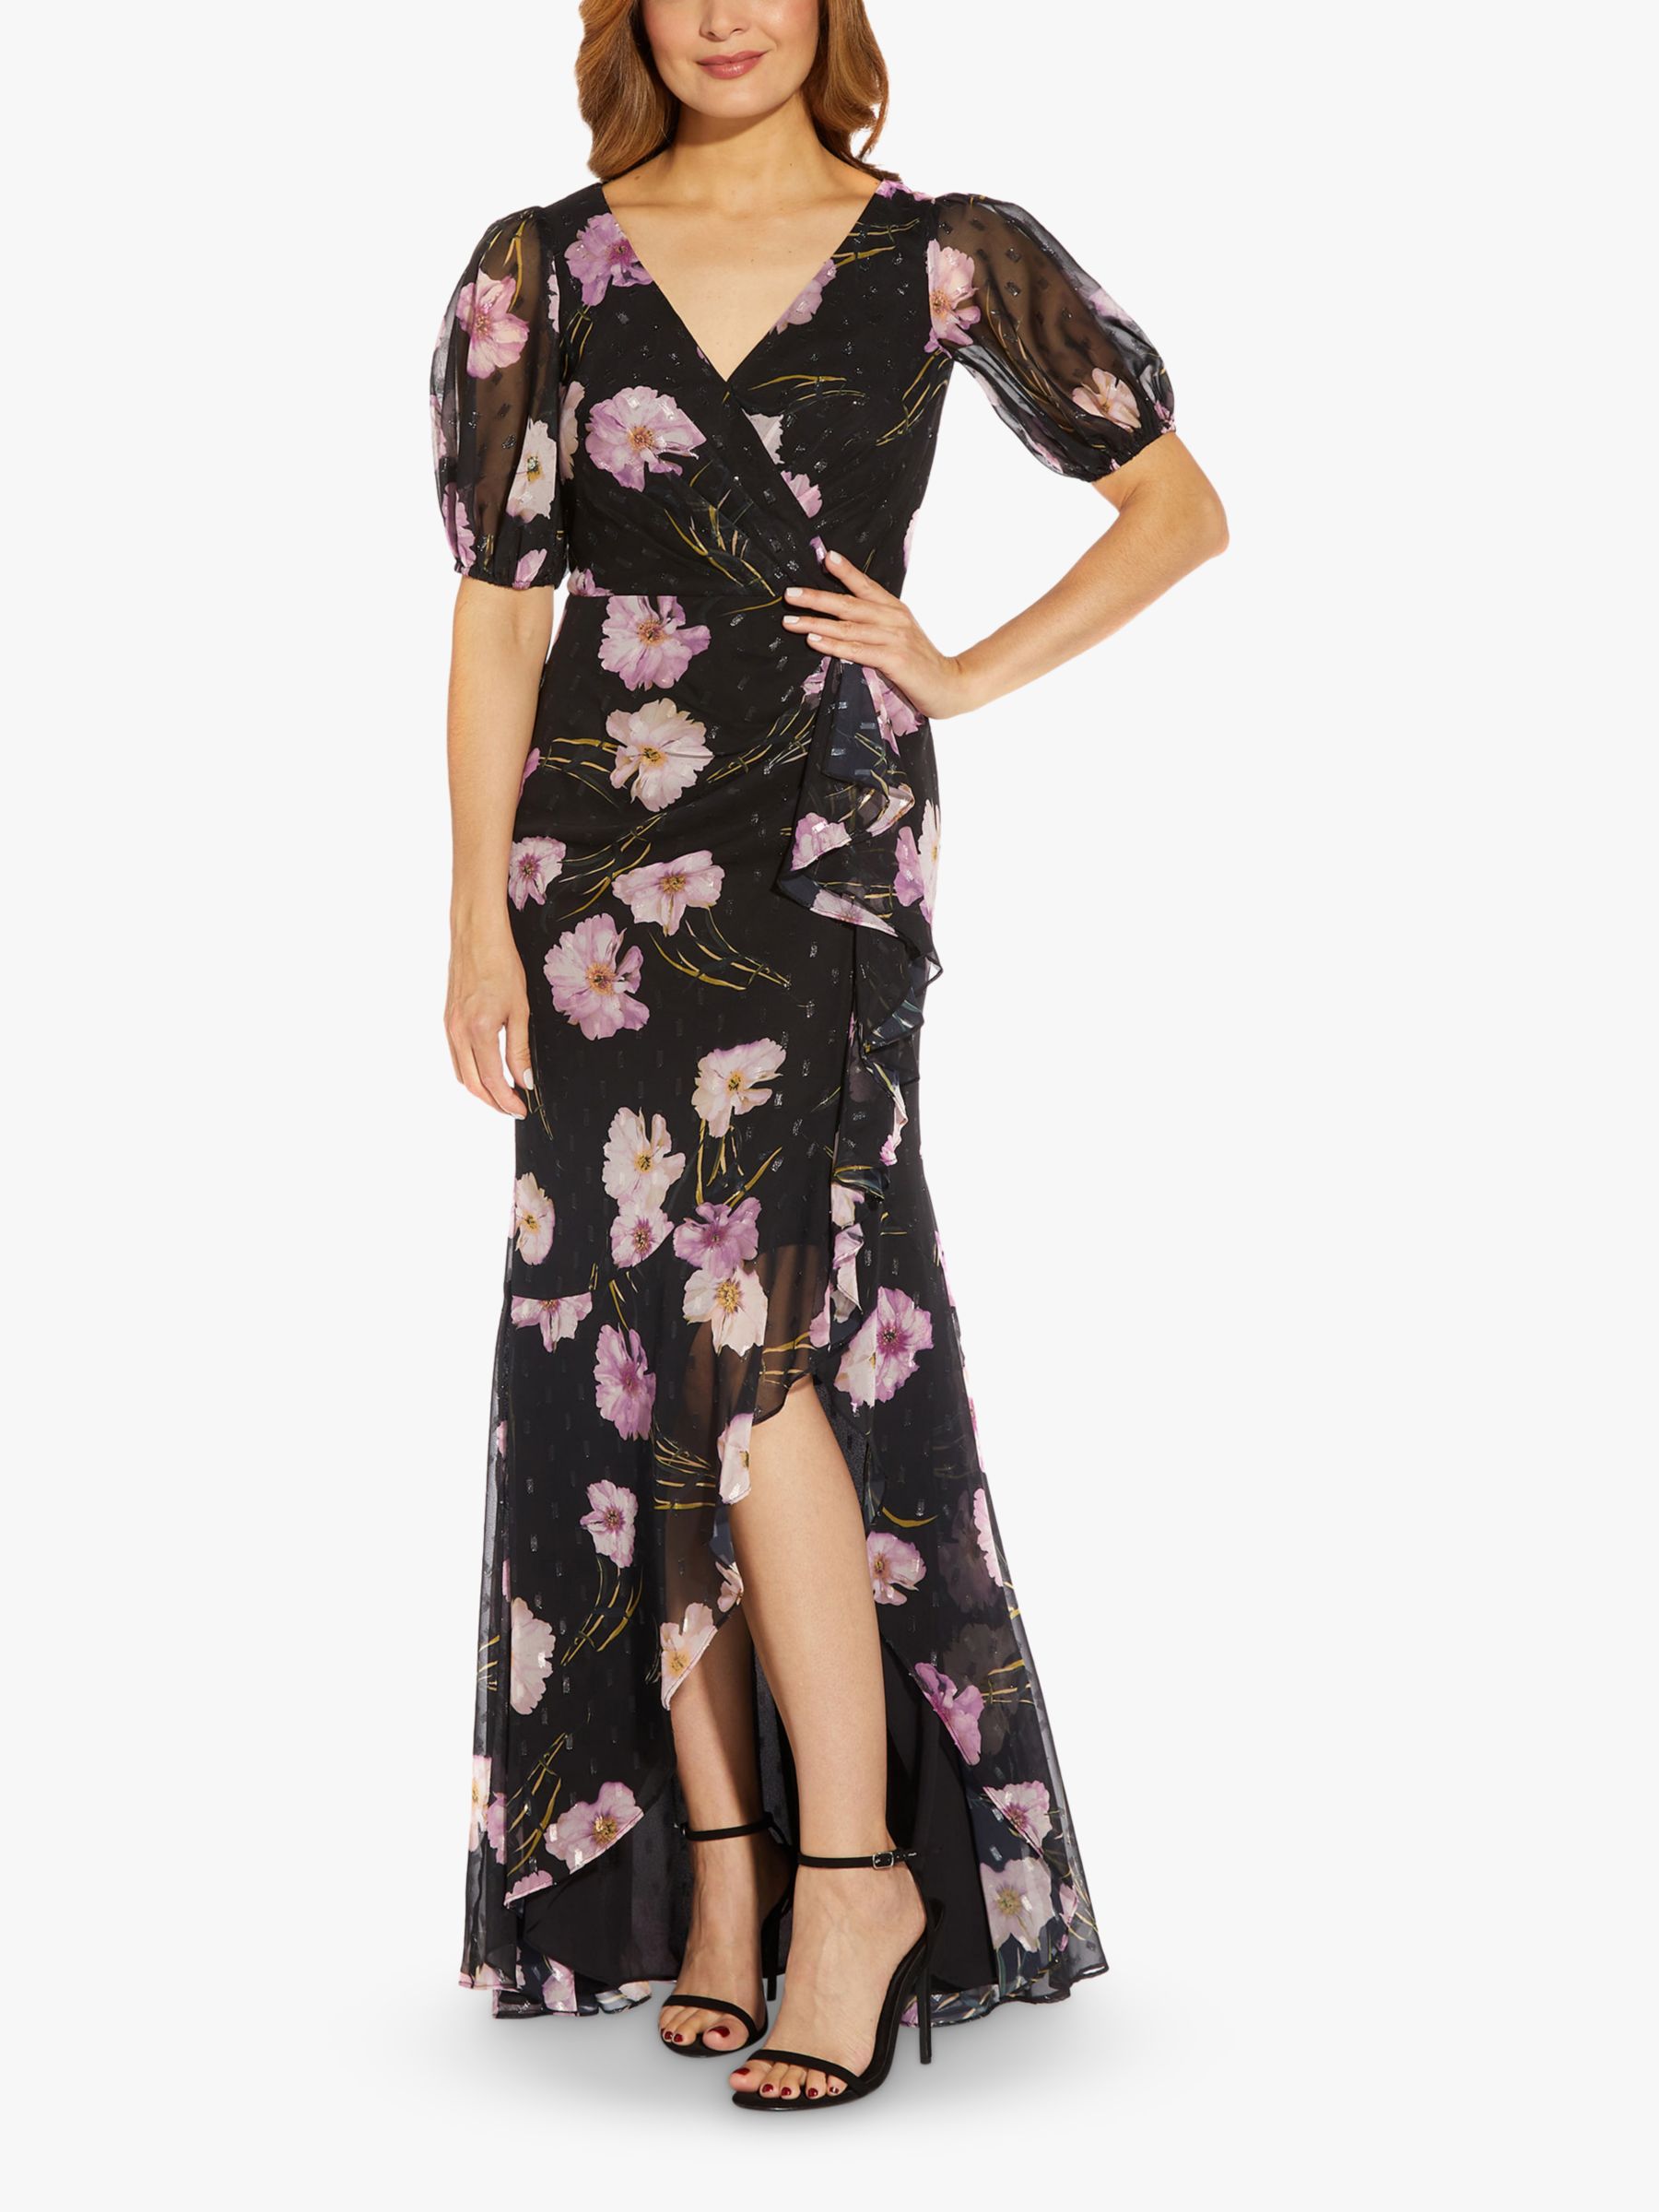 Adrianna Papell Floral Chiffon Dress, Black/Multi at John Lewis \u0026 Partners